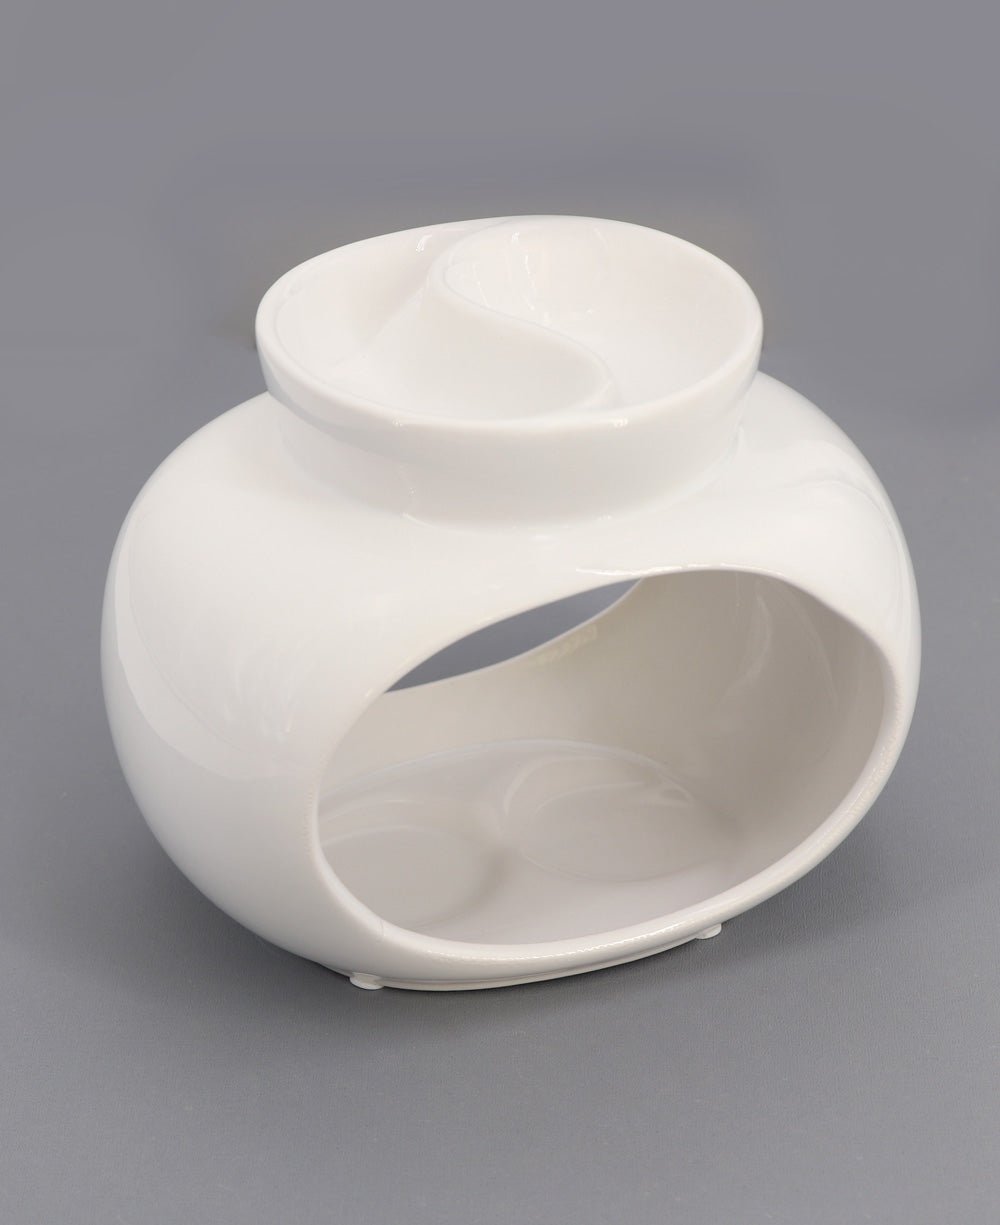 Yin Yang Design Ceramic Oil or Wax Melt Burner